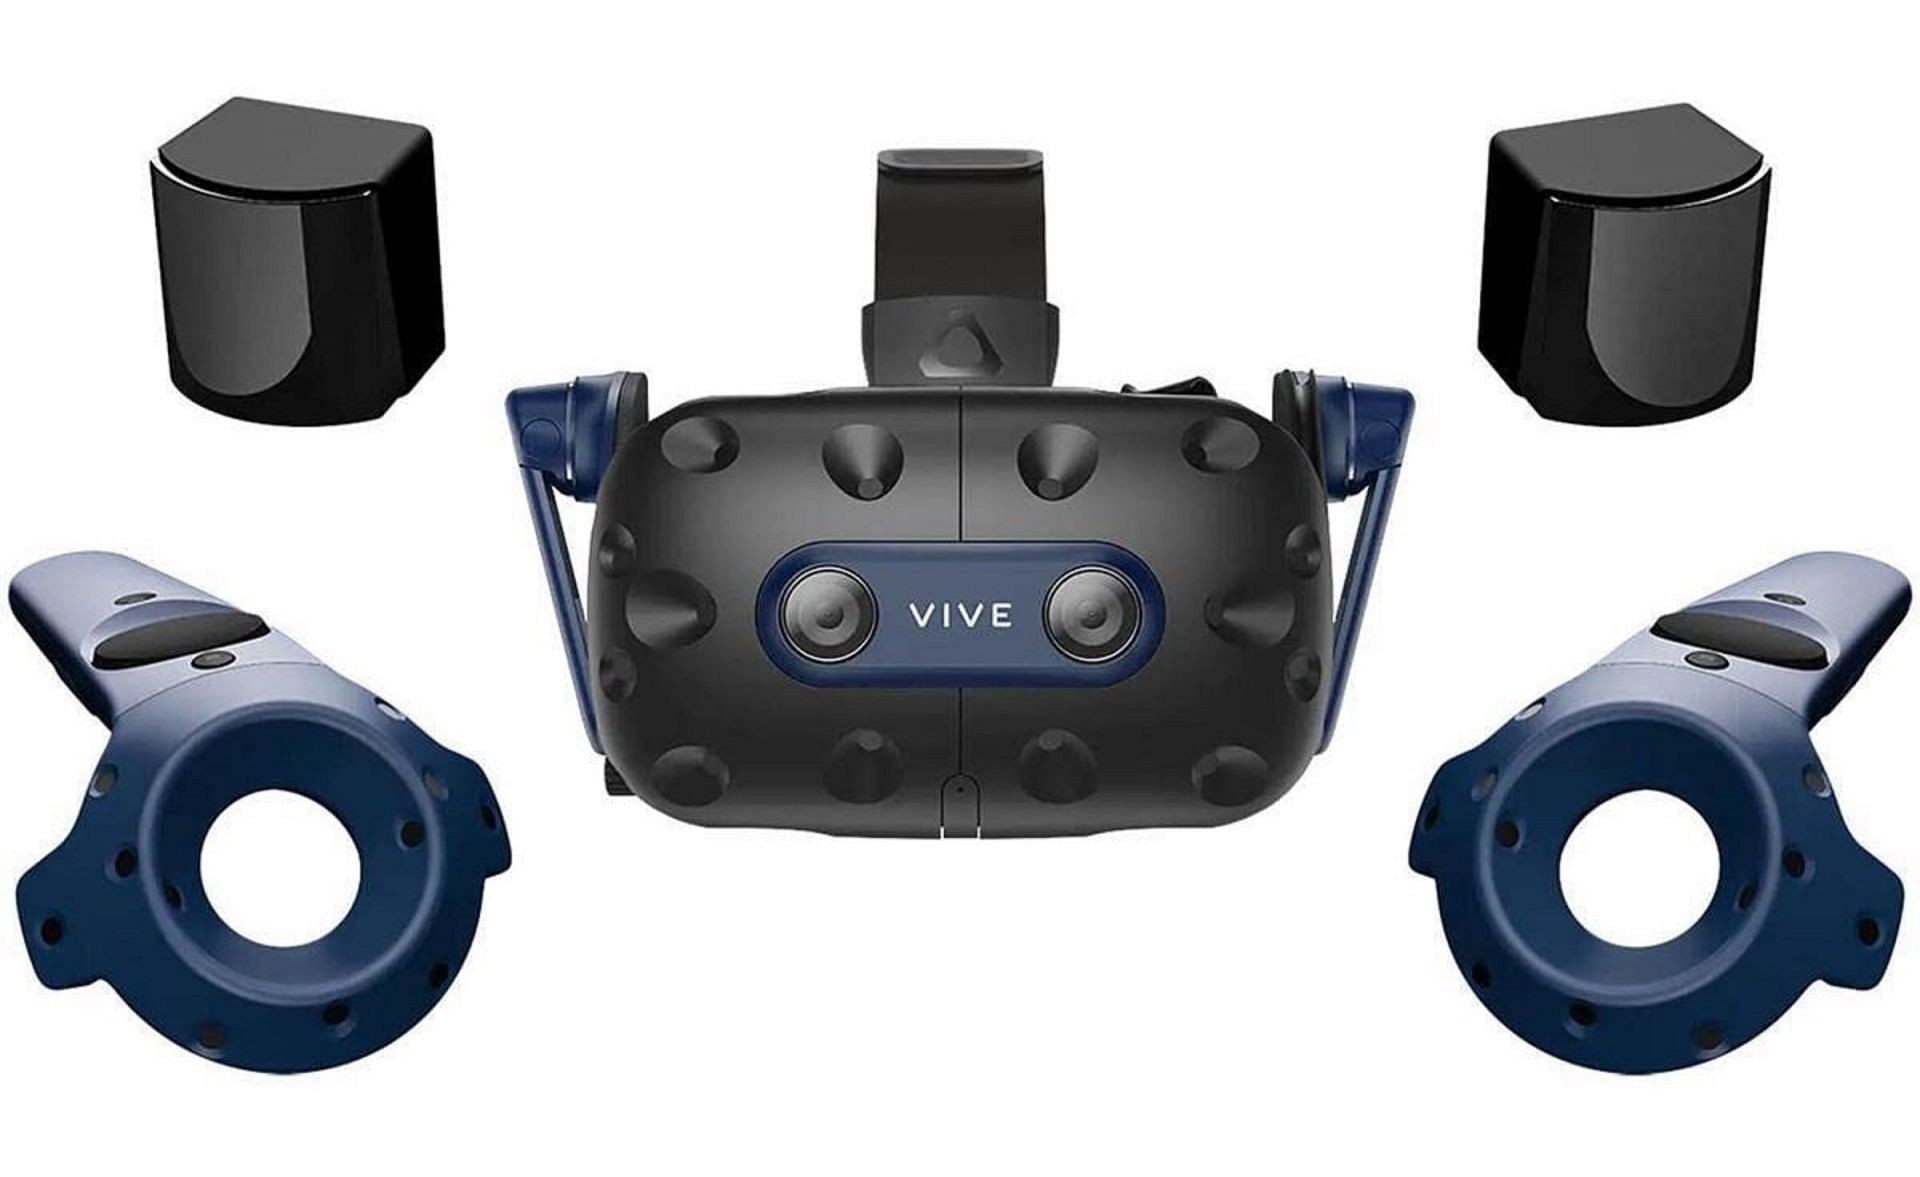 HTC VIVE Pro 2 Virtual Reality System (Image via HTC)